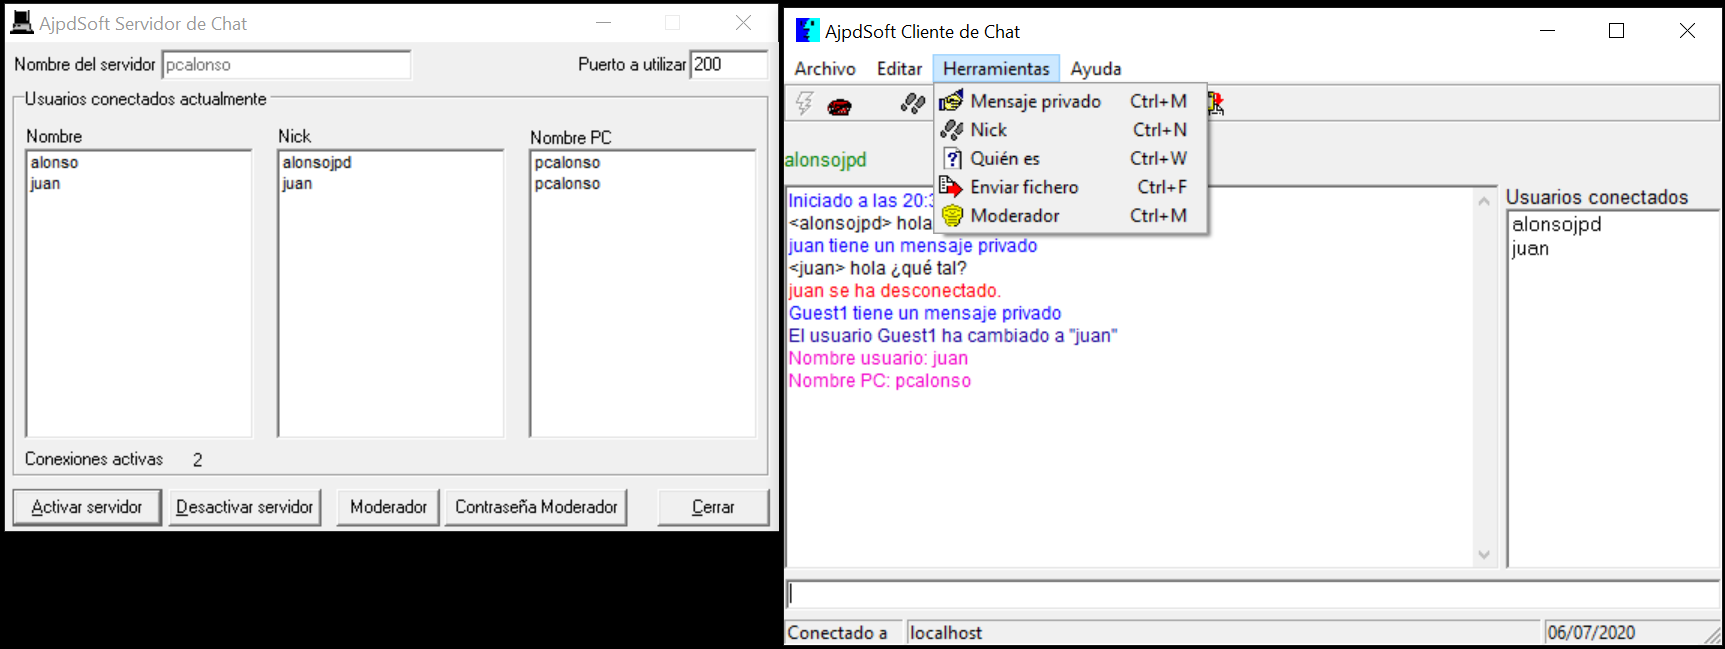 AjpdSoft Chat Código Fuente Delphi 6